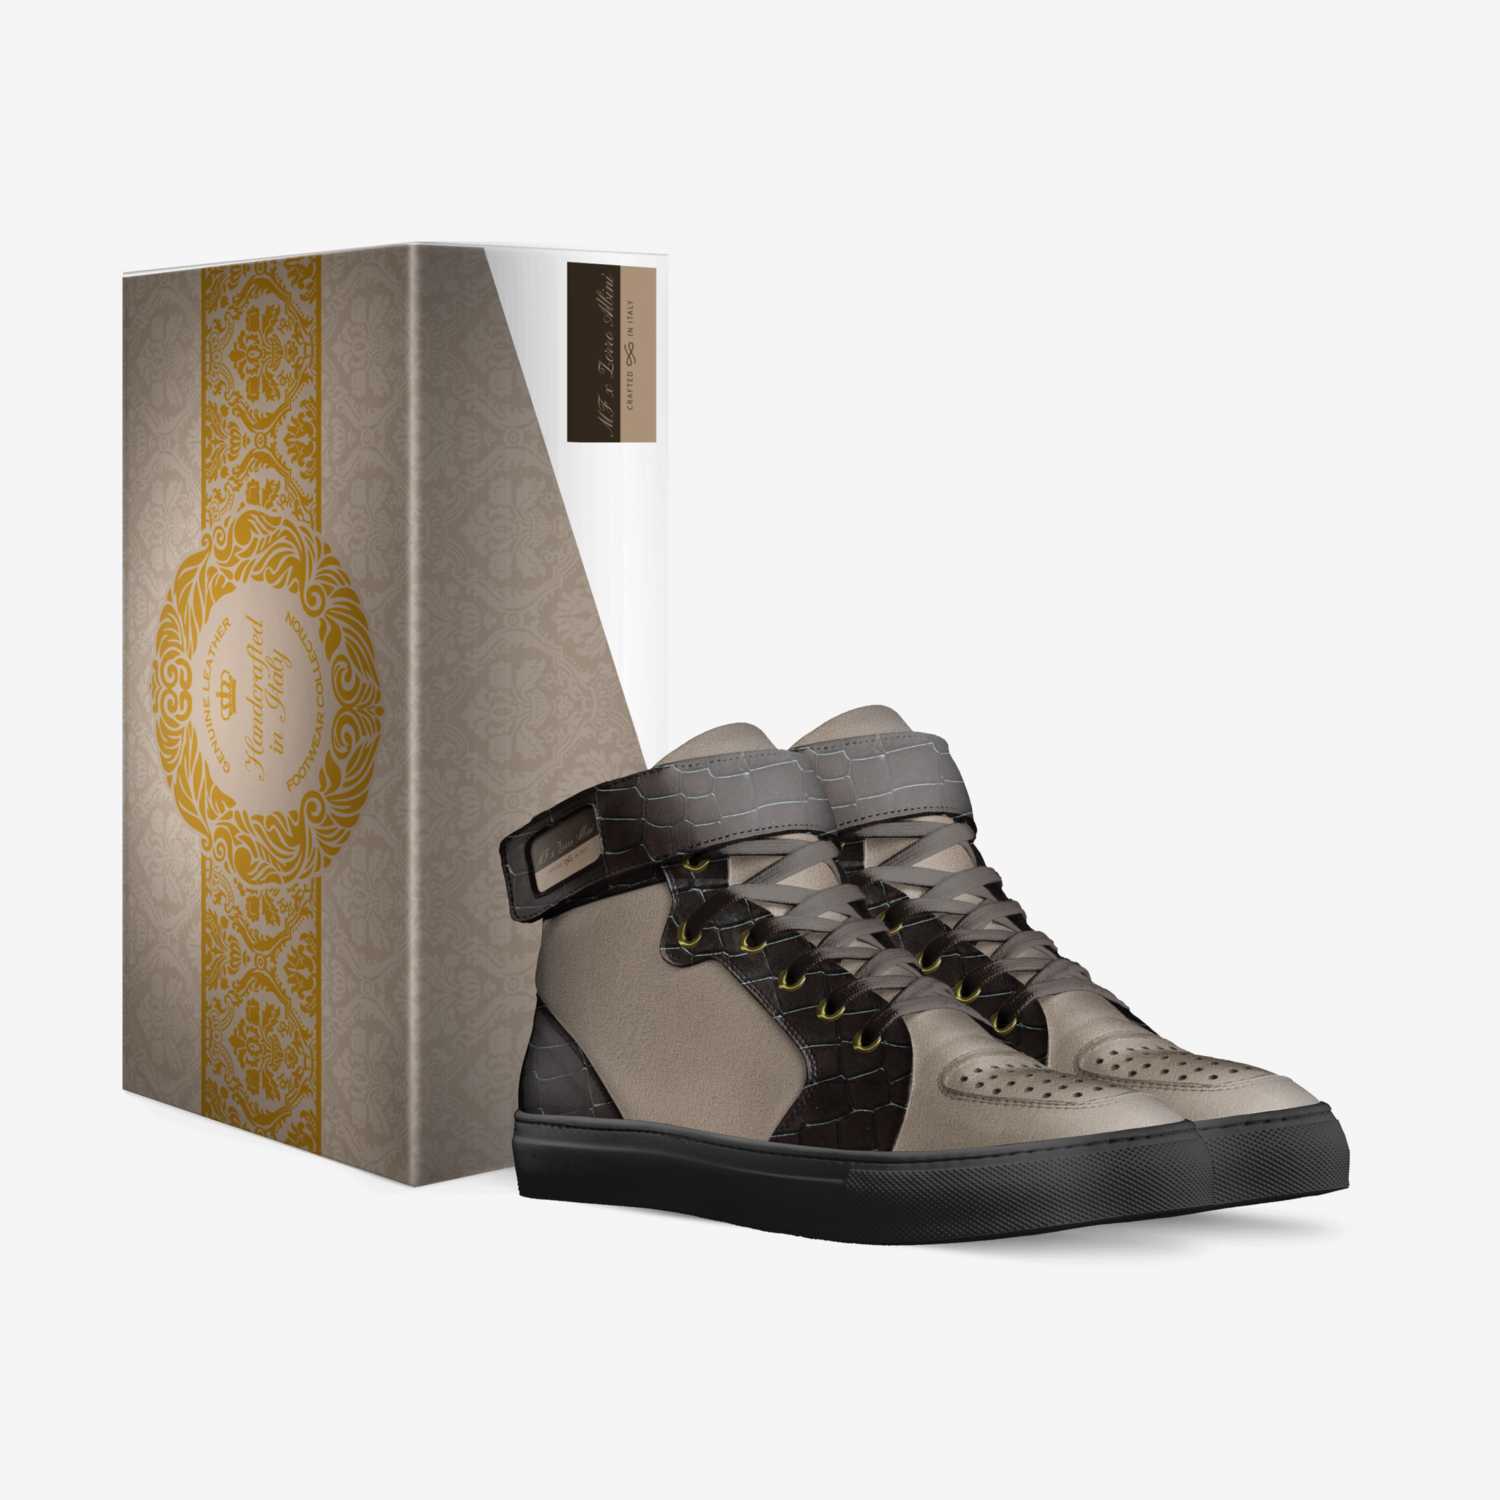 MF x Zorro Albini custom made in Italy shoes by Lucas Tikkanen | Box view